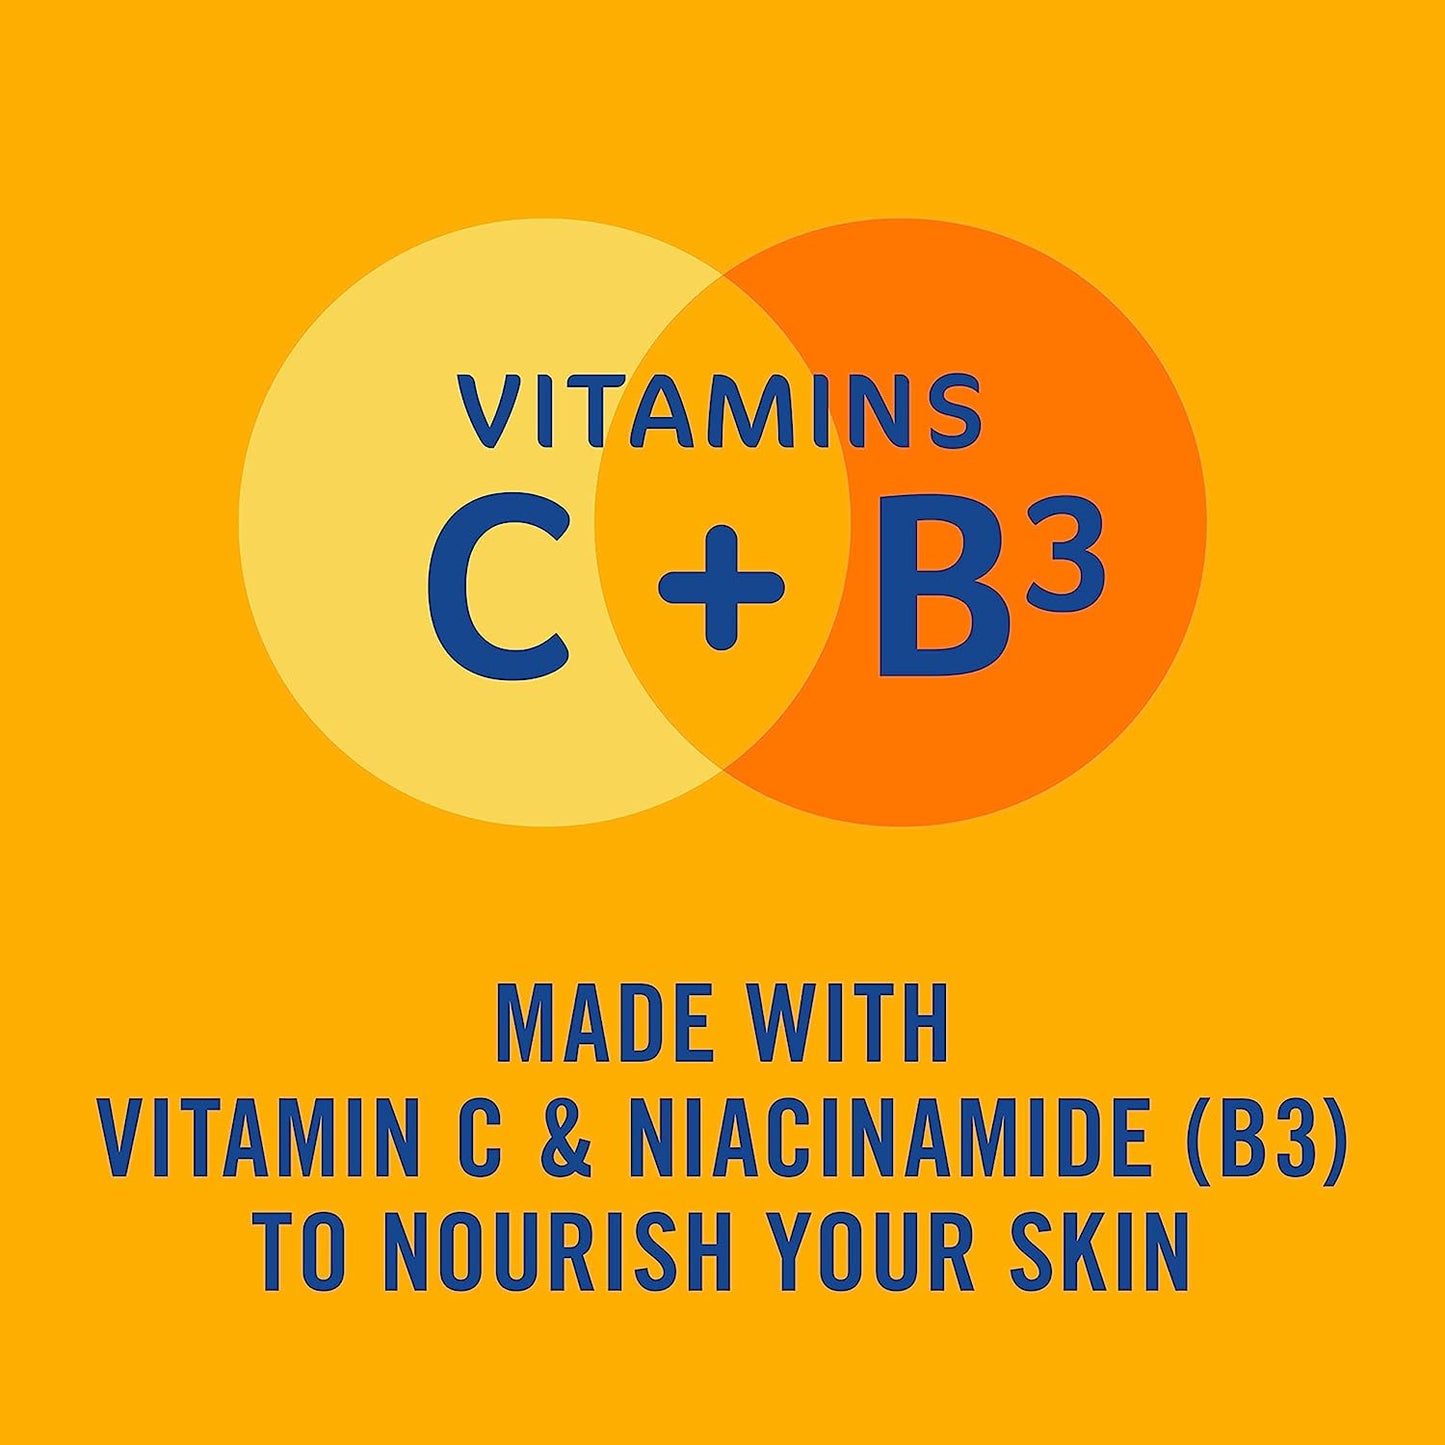 Banana Boat Protect + Vitamins Sunscreen Lotion SPF 50+ 133ml / 4.5 fl oz